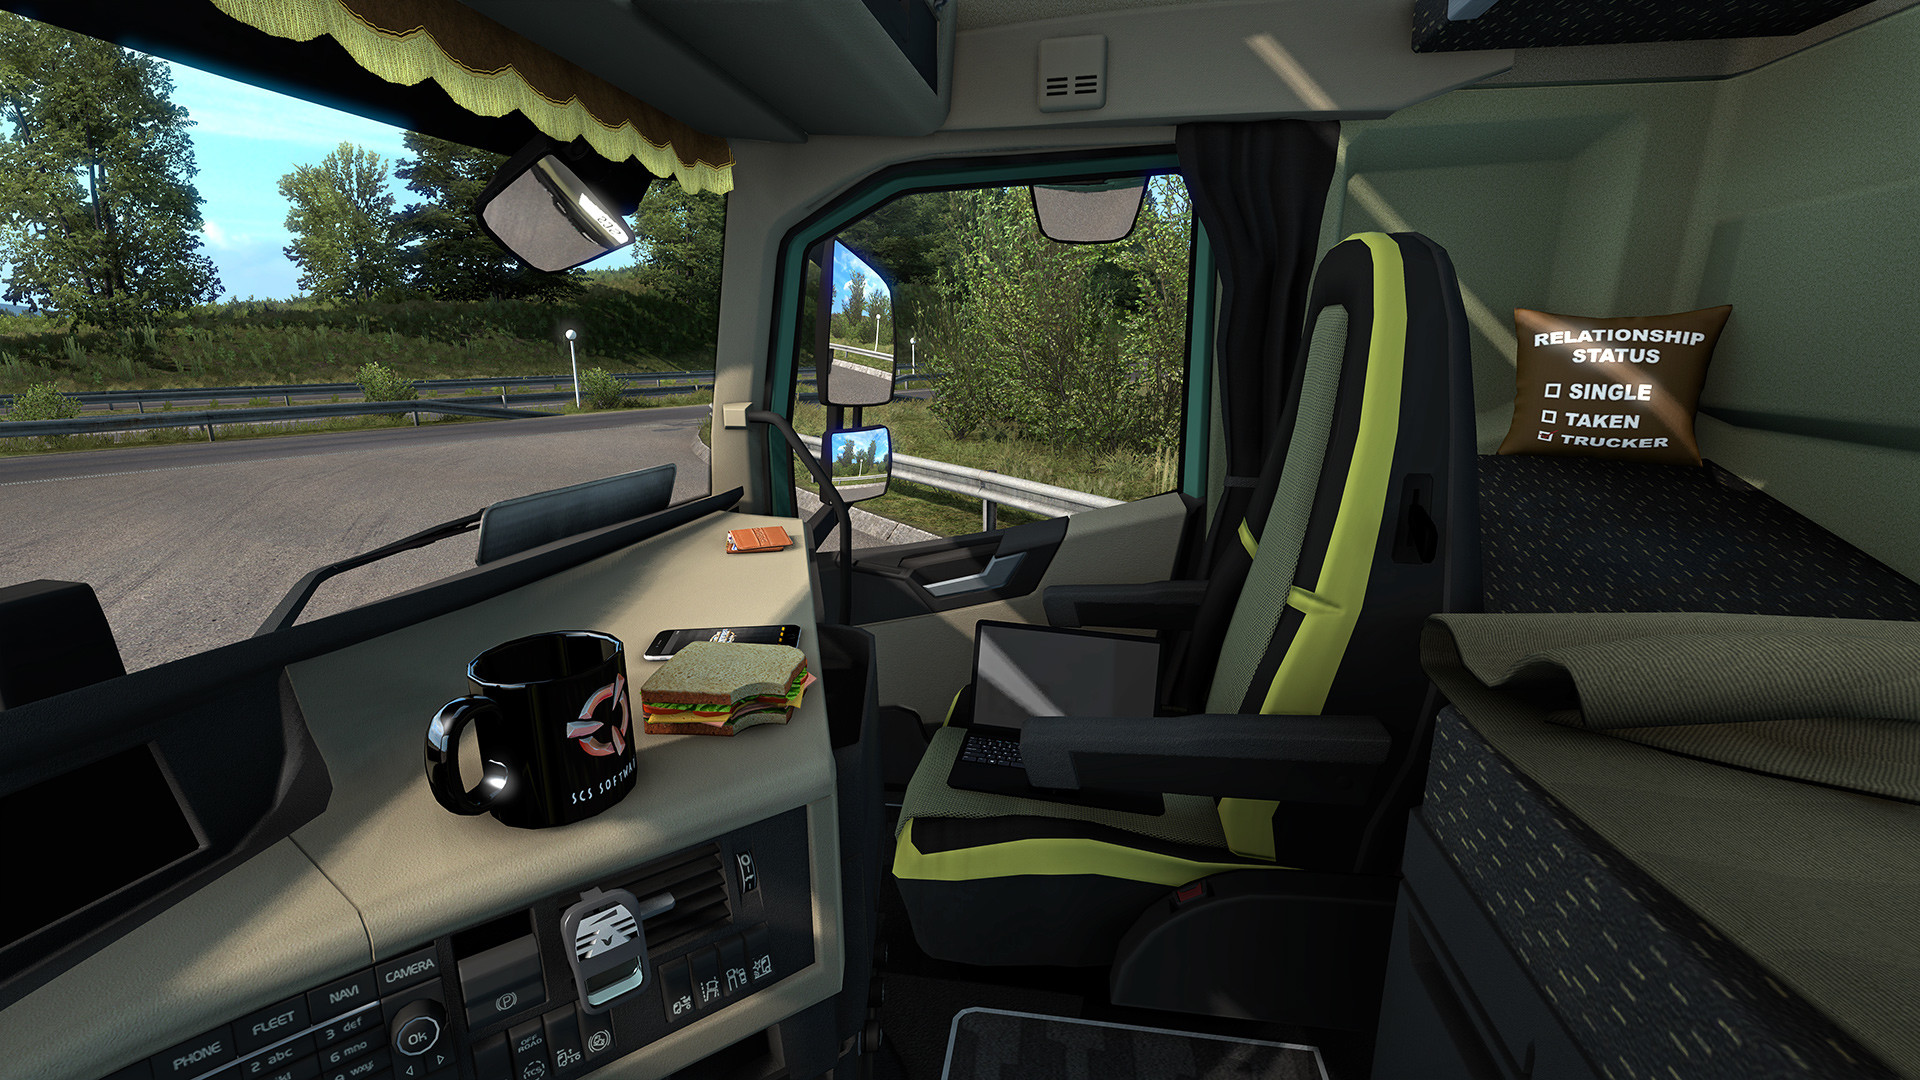 Save 70% on Euro Truck Simulator 2 - Cabin Accessories on Steam